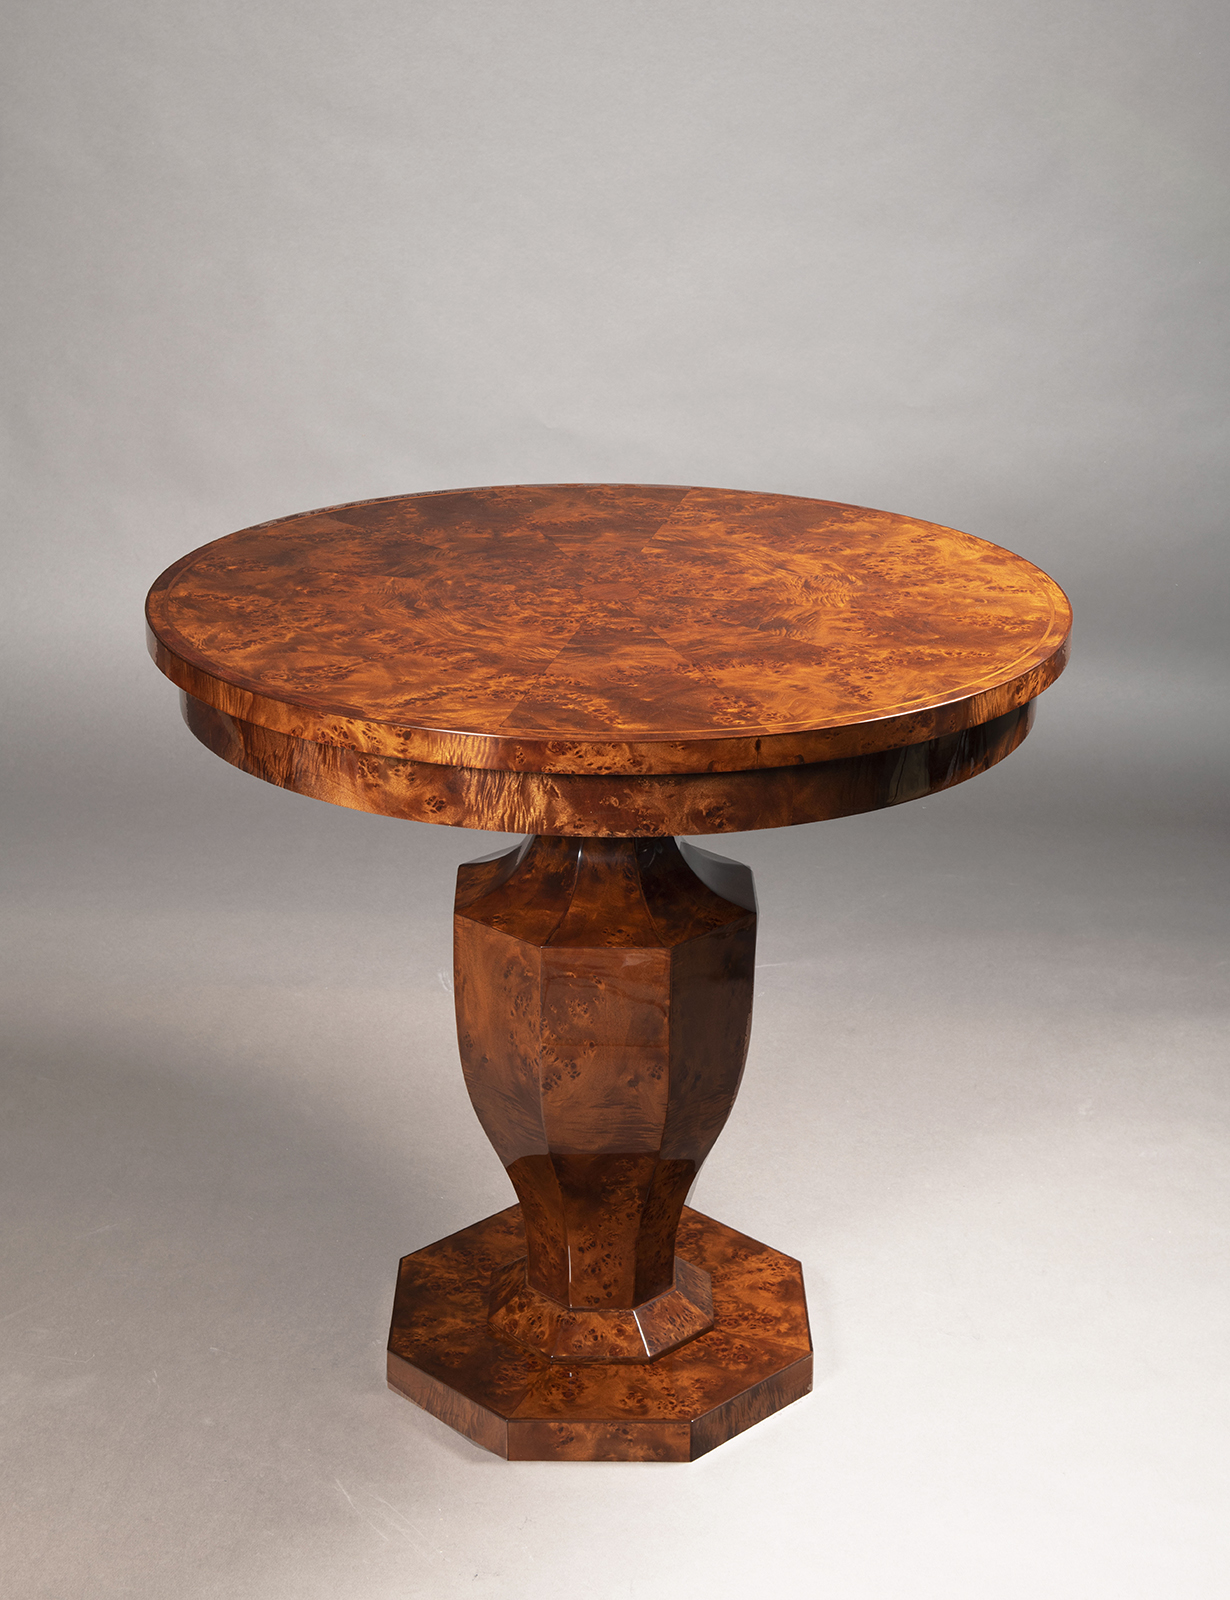 A Biedermeier Style Side Table by ILIAD Design